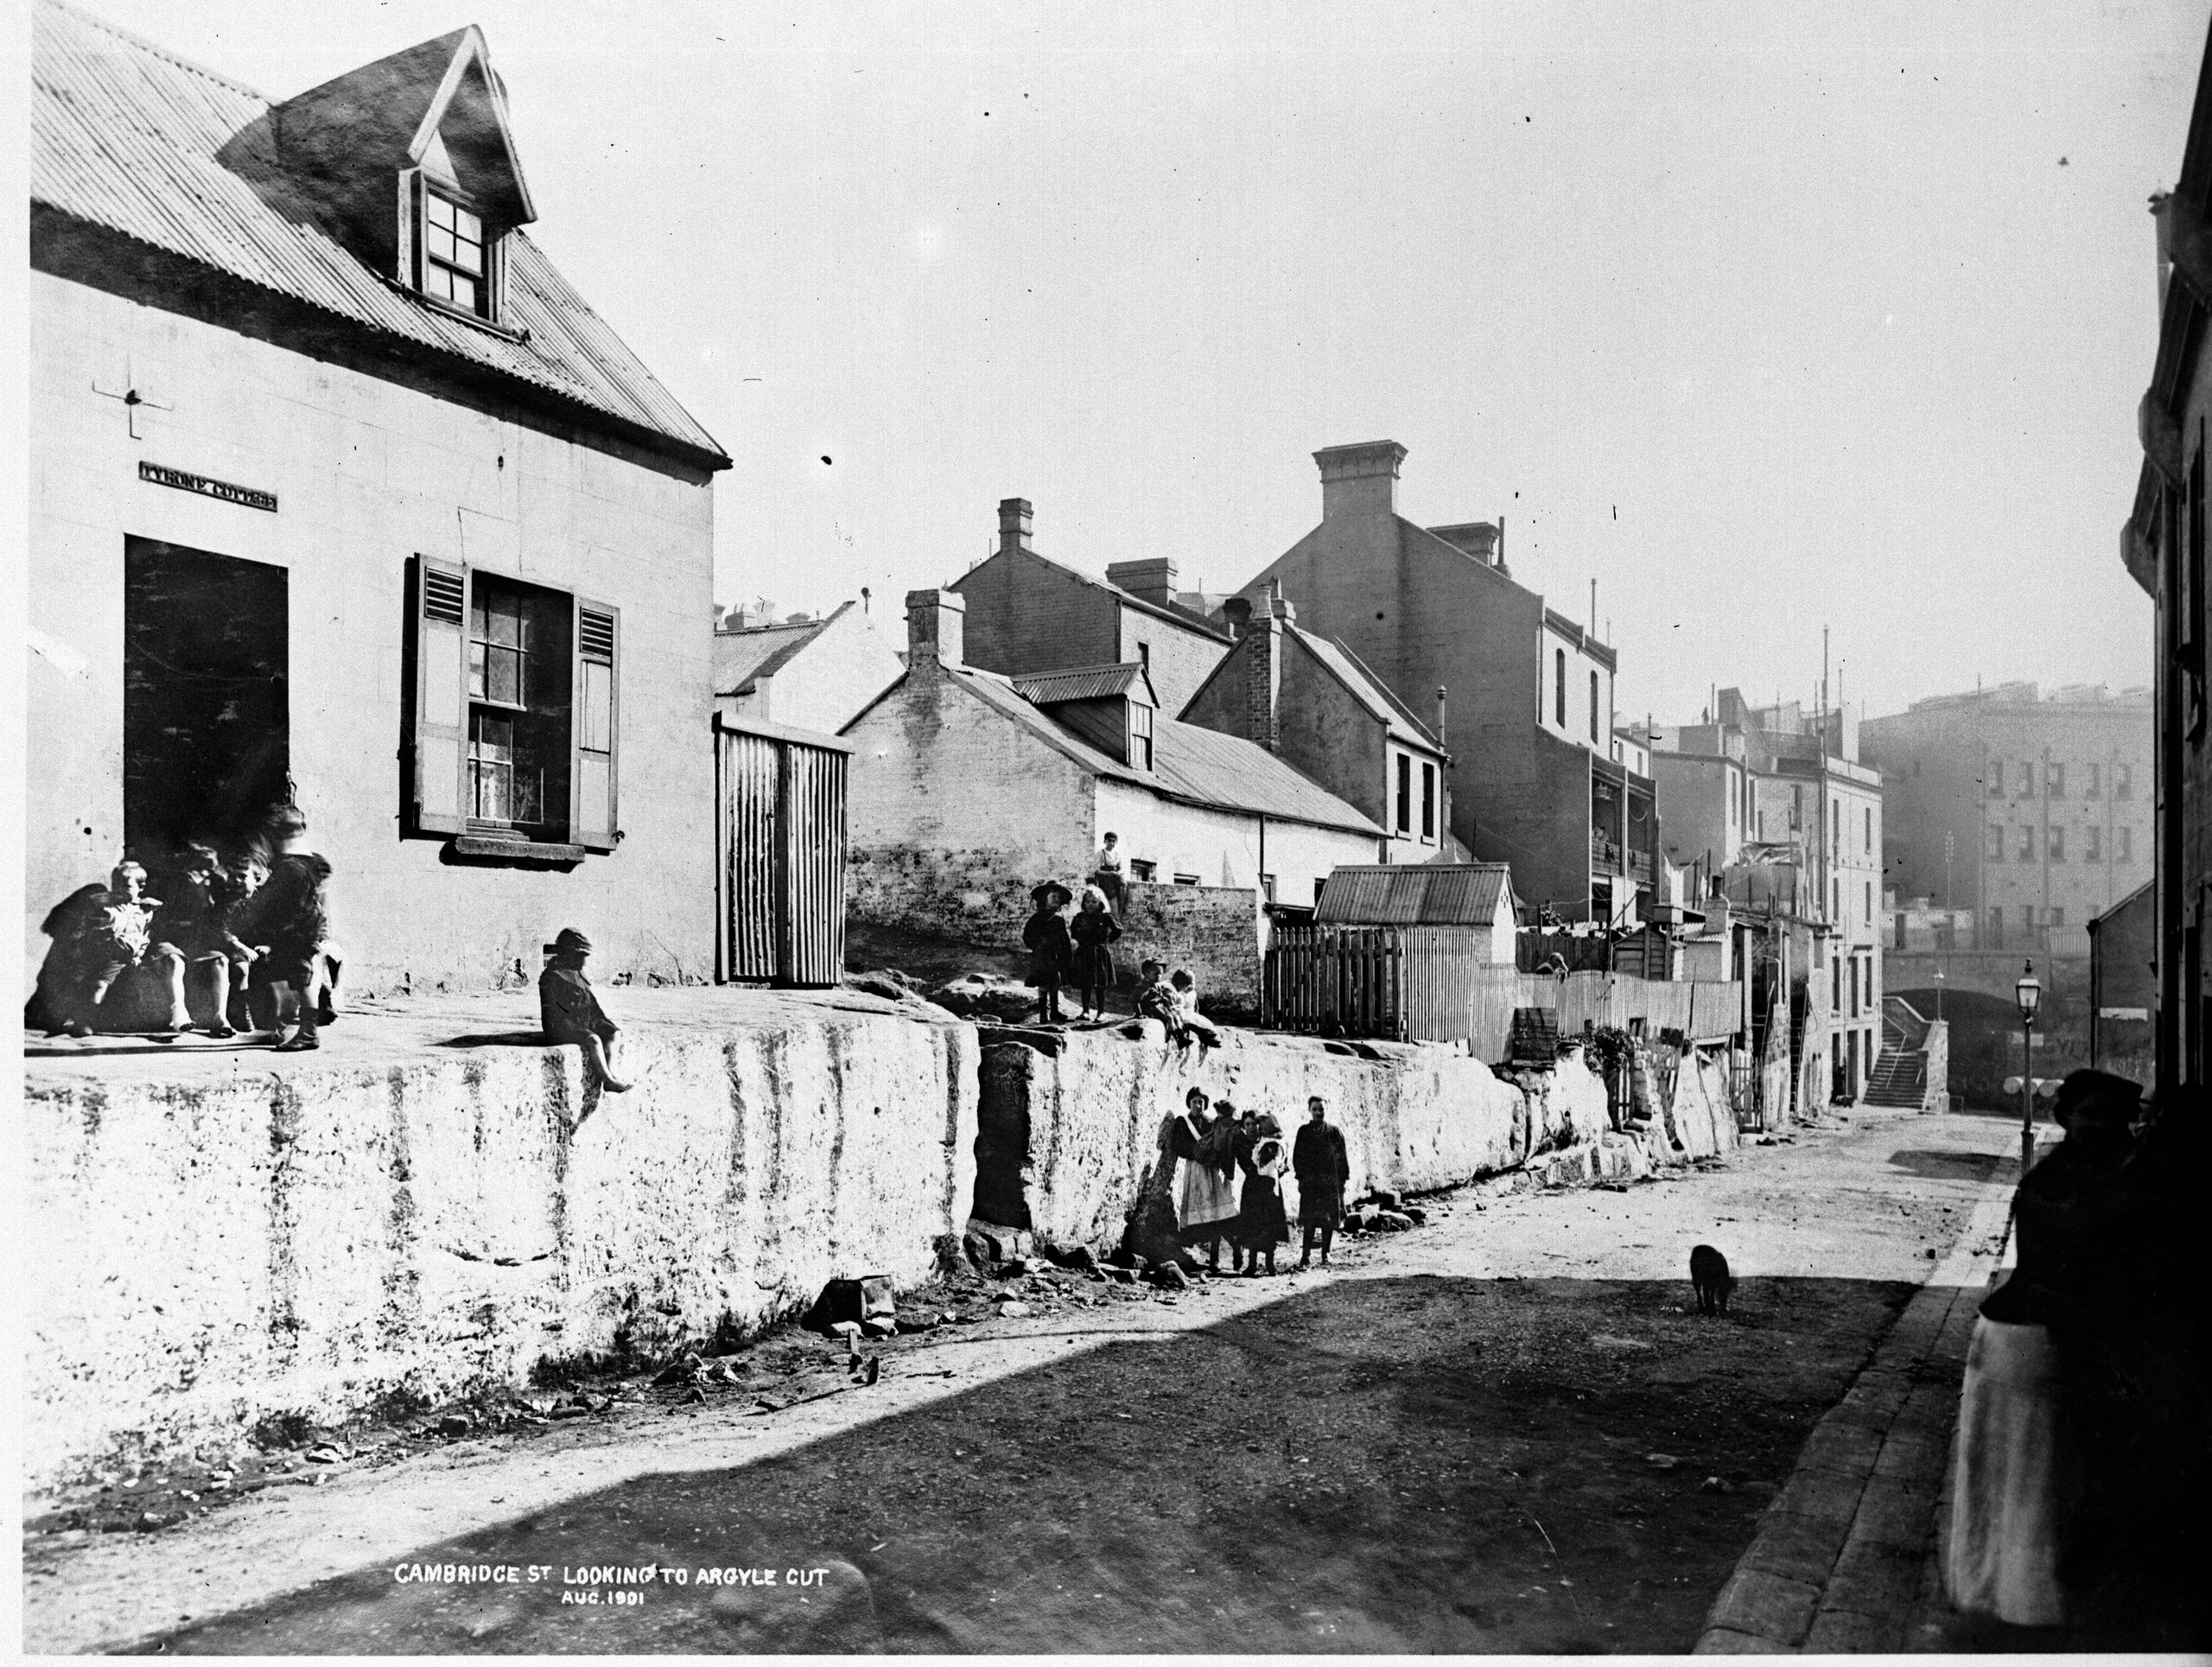 Cambridge Street looking to Argyle Cut 1901